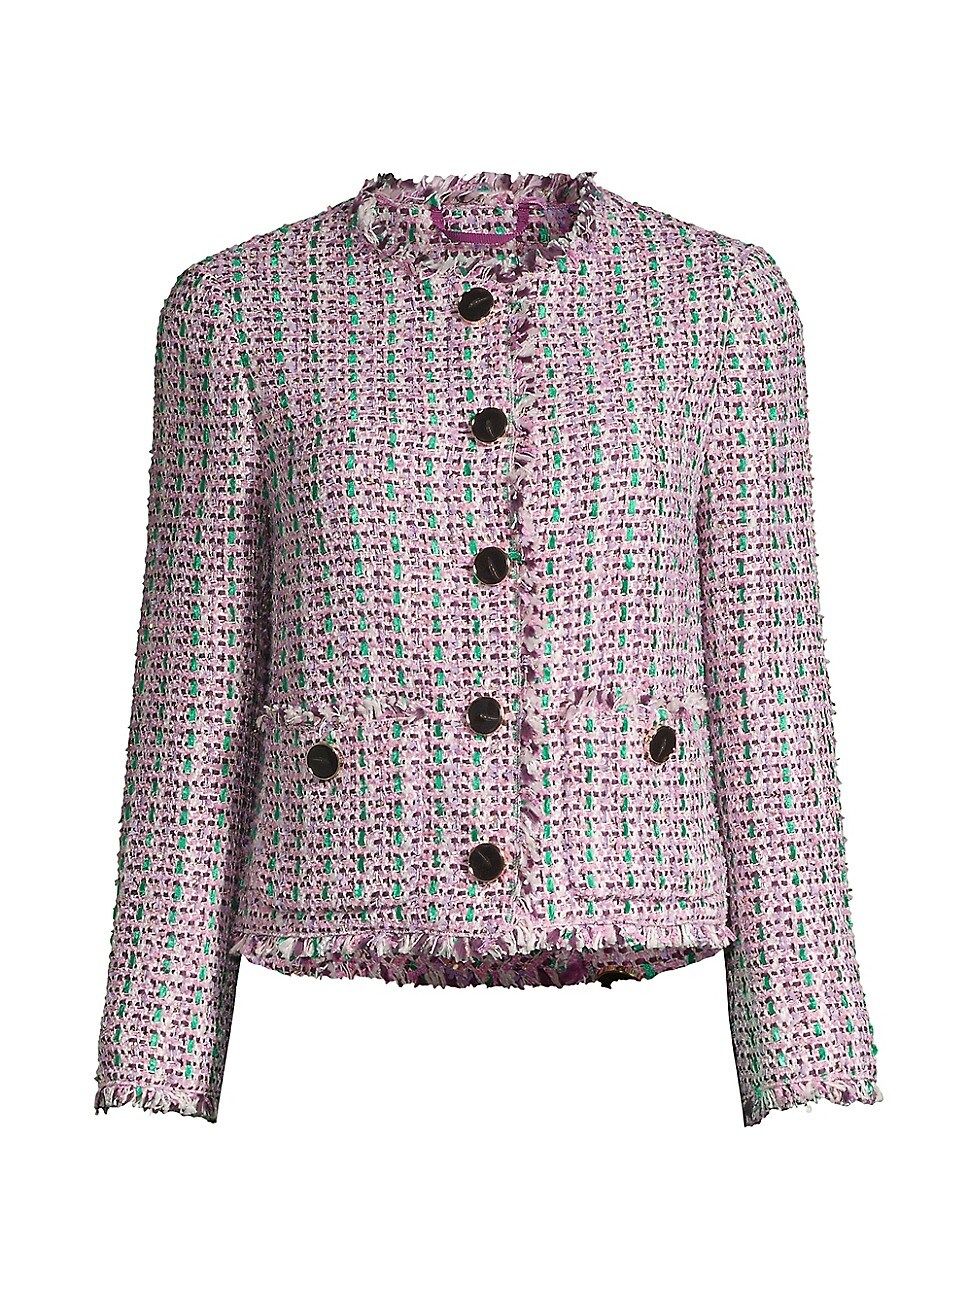 Kate Spade New York Women's Jasmin Tweed Jacket - Chalk Pink - Size 4 | Saks Fifth Avenue